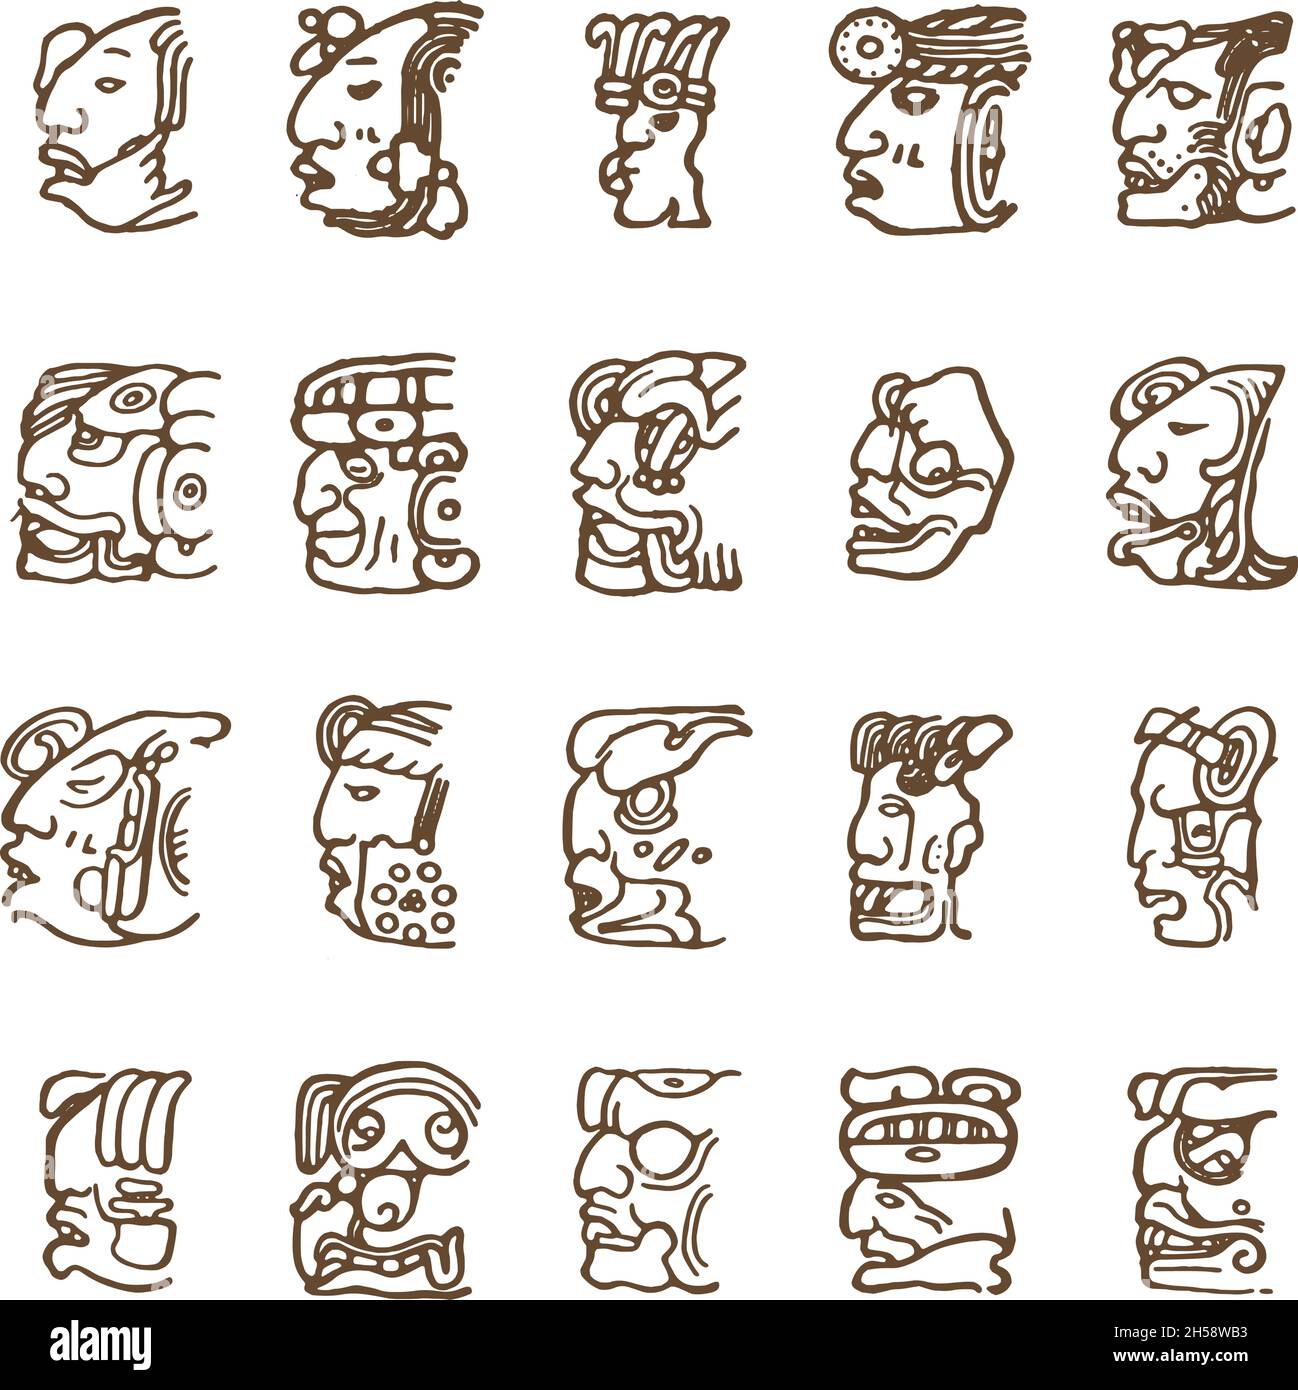 Jeu d'illustrations de symboles de masque des dieux mayas anciens Illustration de Vecteur